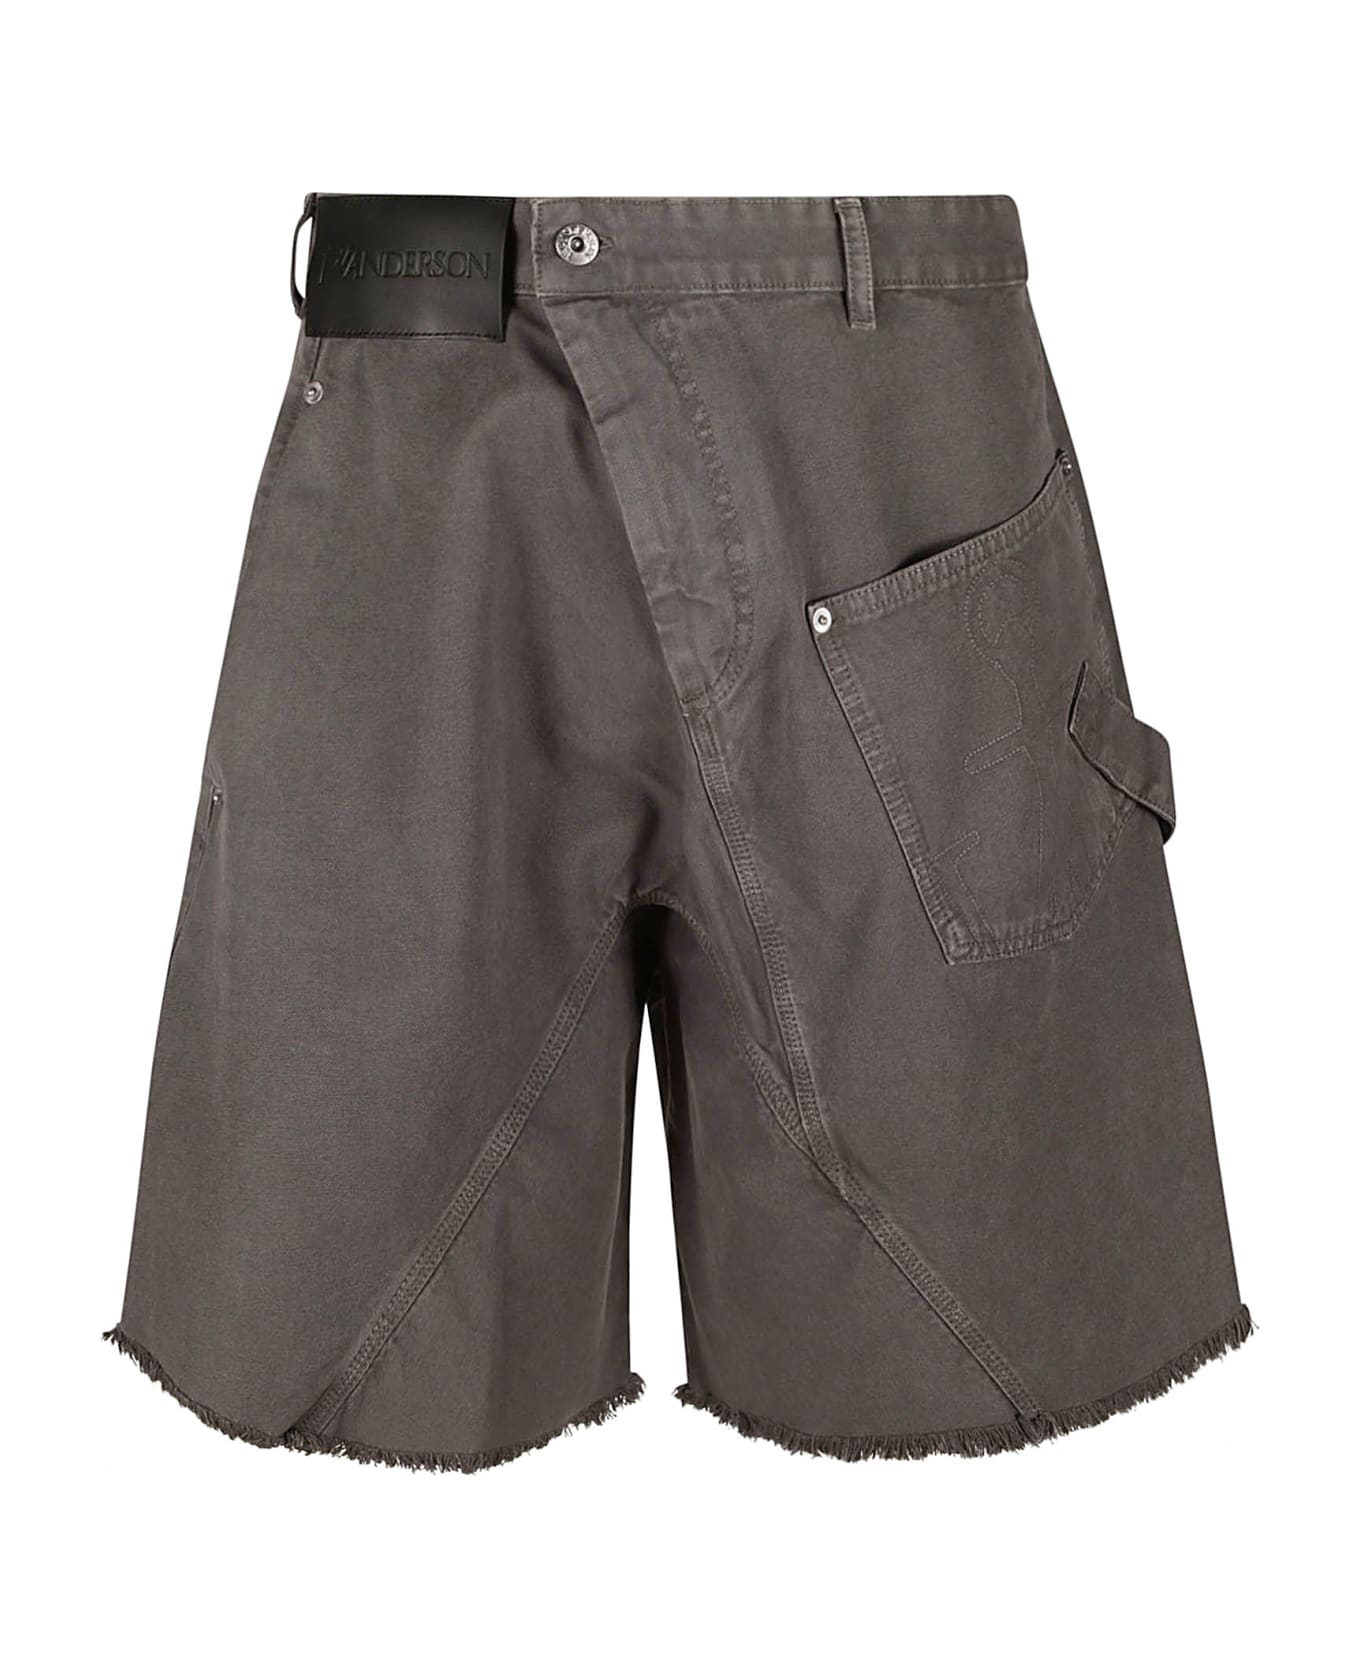 J.W. Anderson Twisted Workwear Shorts - GREY